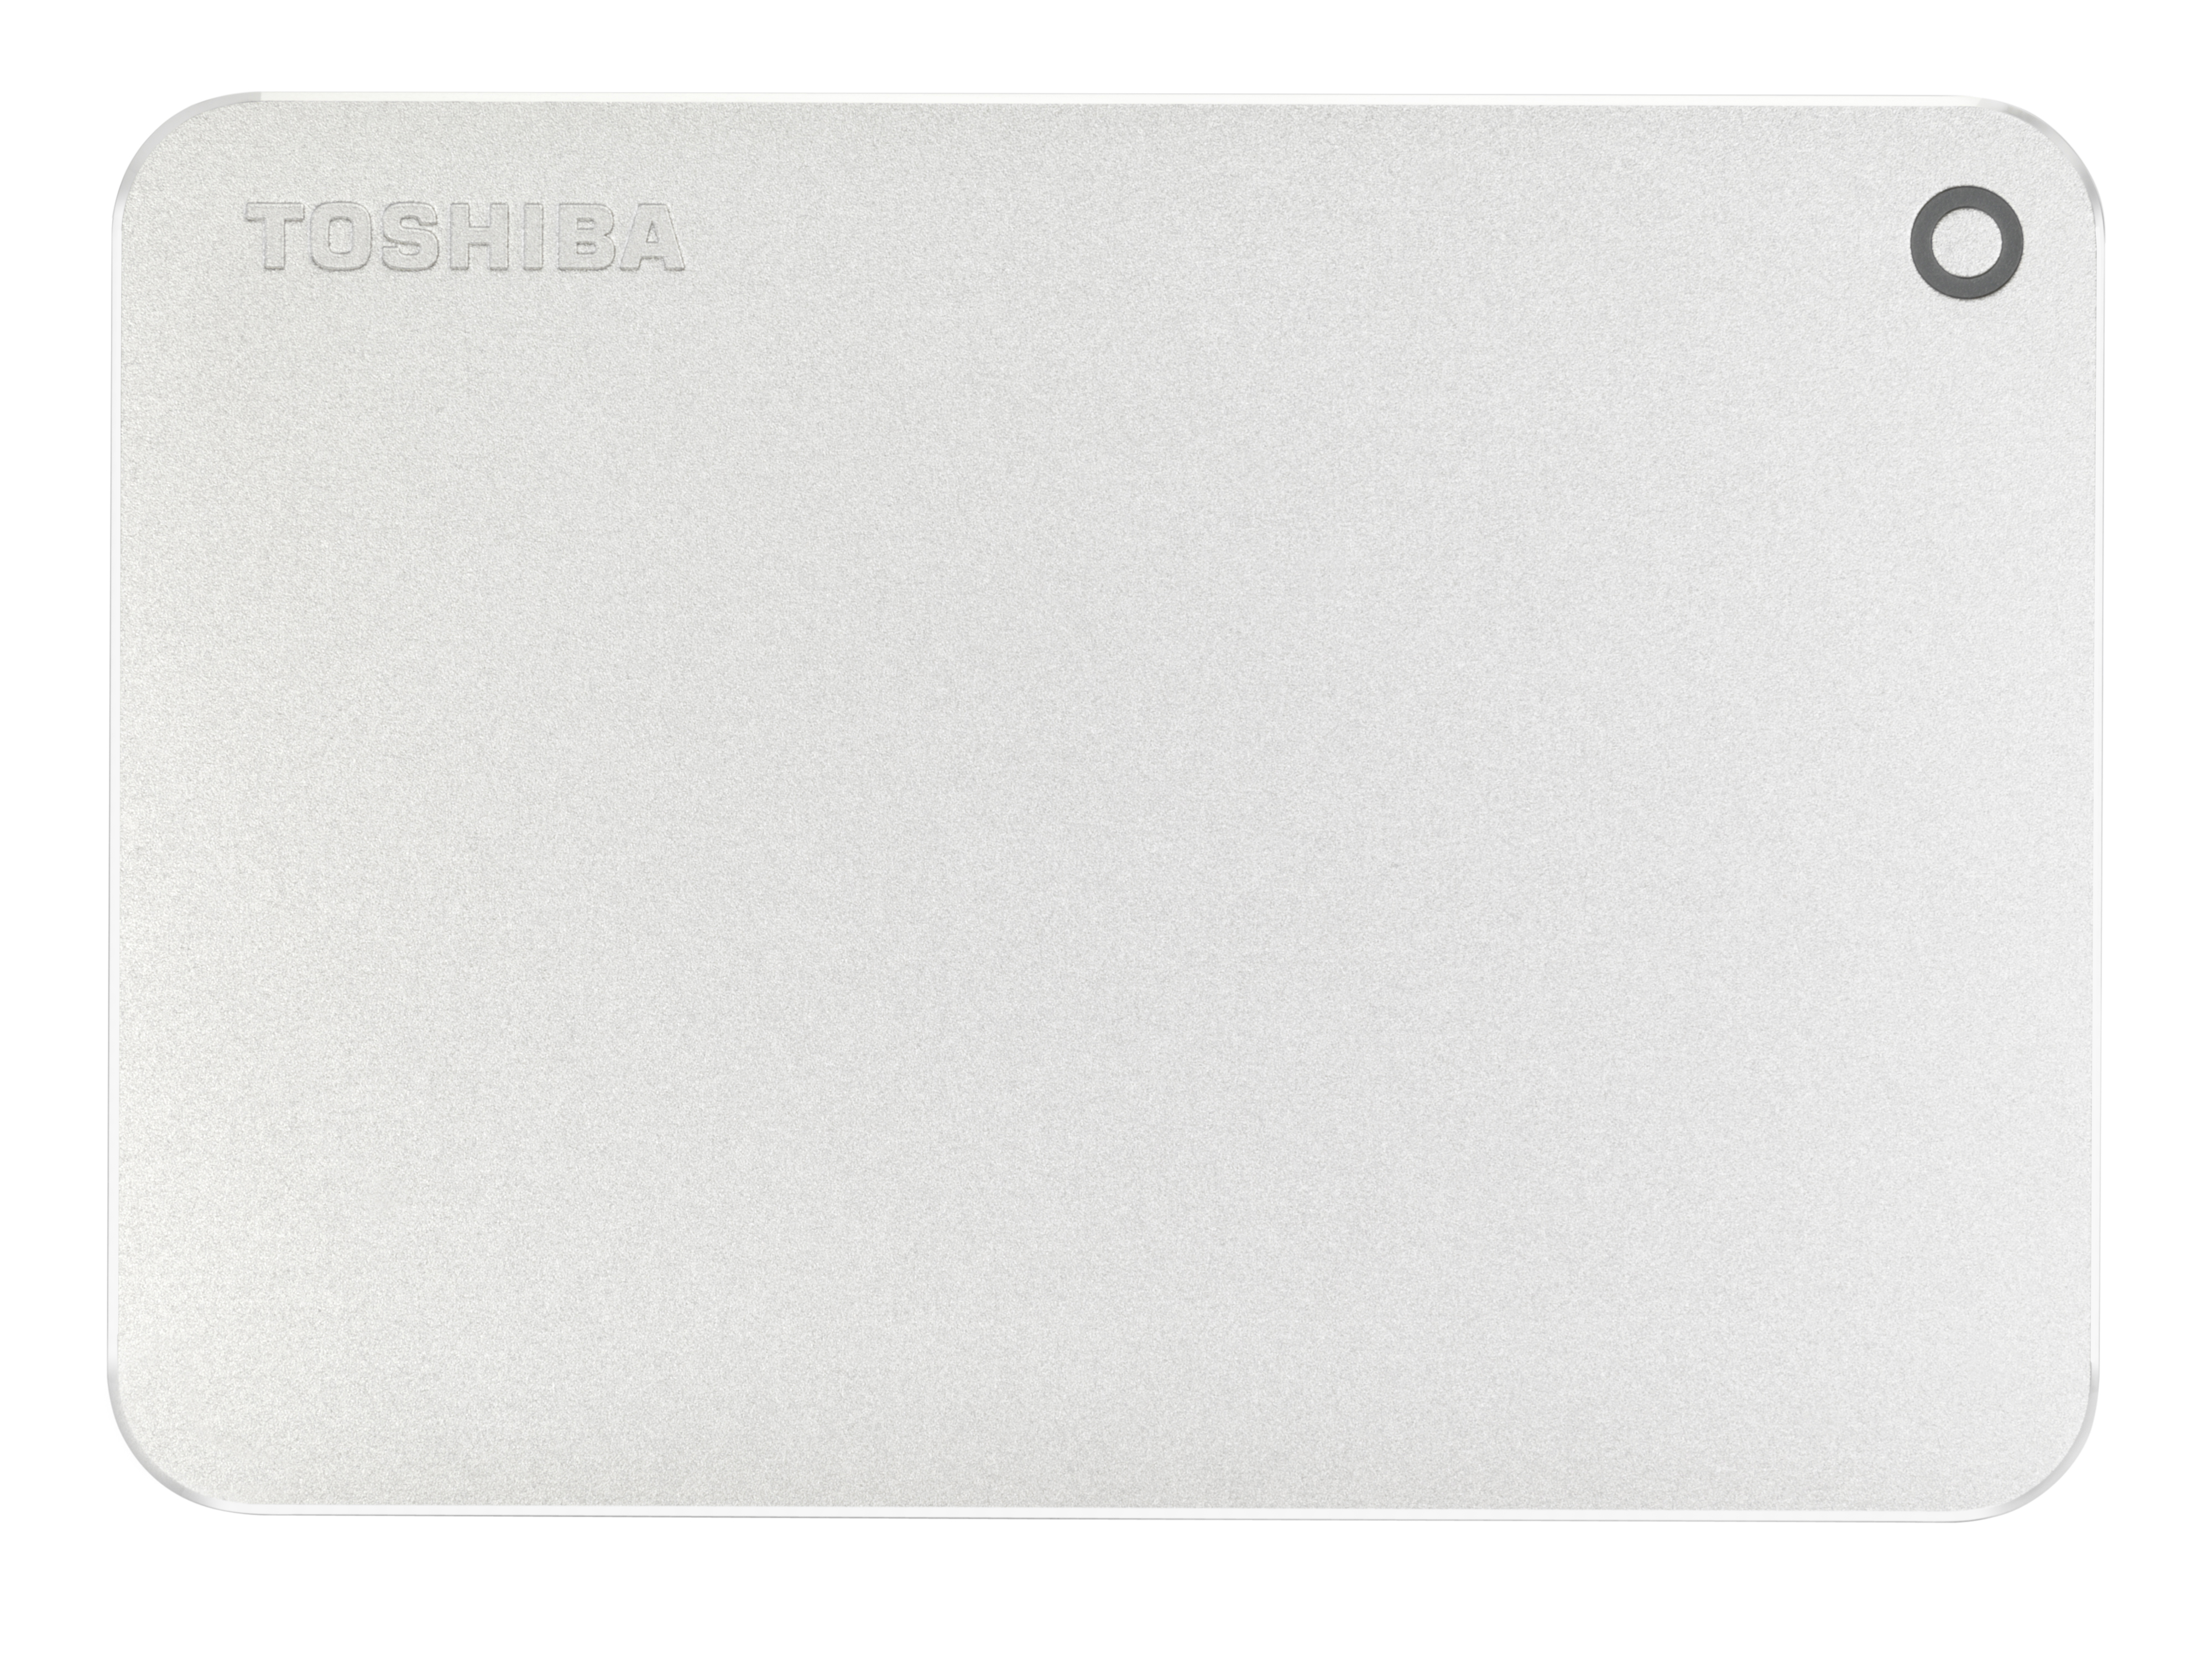 TOSHIBA Canvio extern, Zoll, HDD, TB Silber Festplatte, 2,5 1 Premium